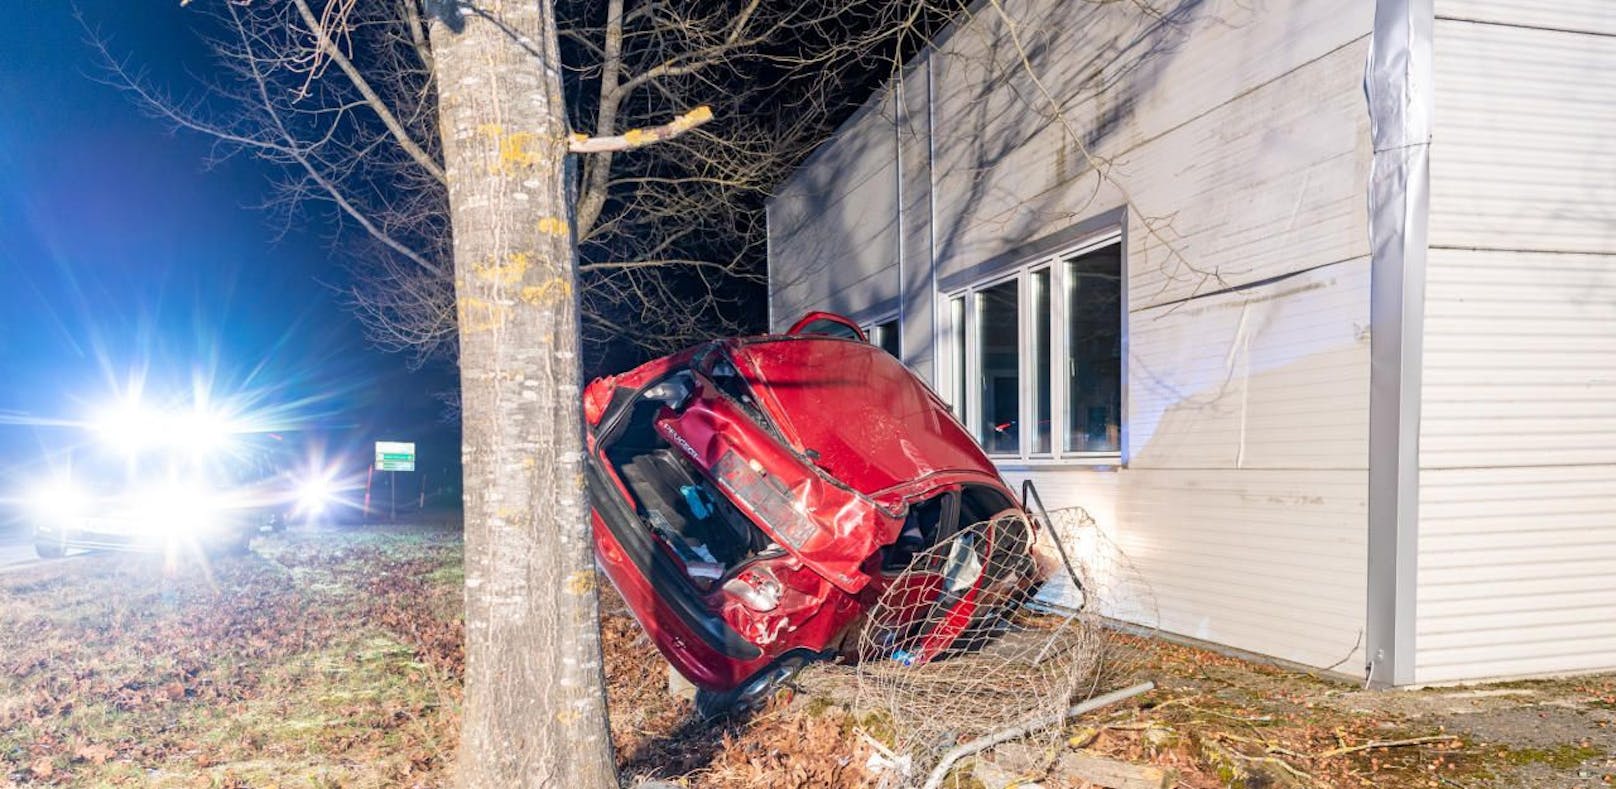 "Geblendet" – Auto gegen Hausmauer geschleudert